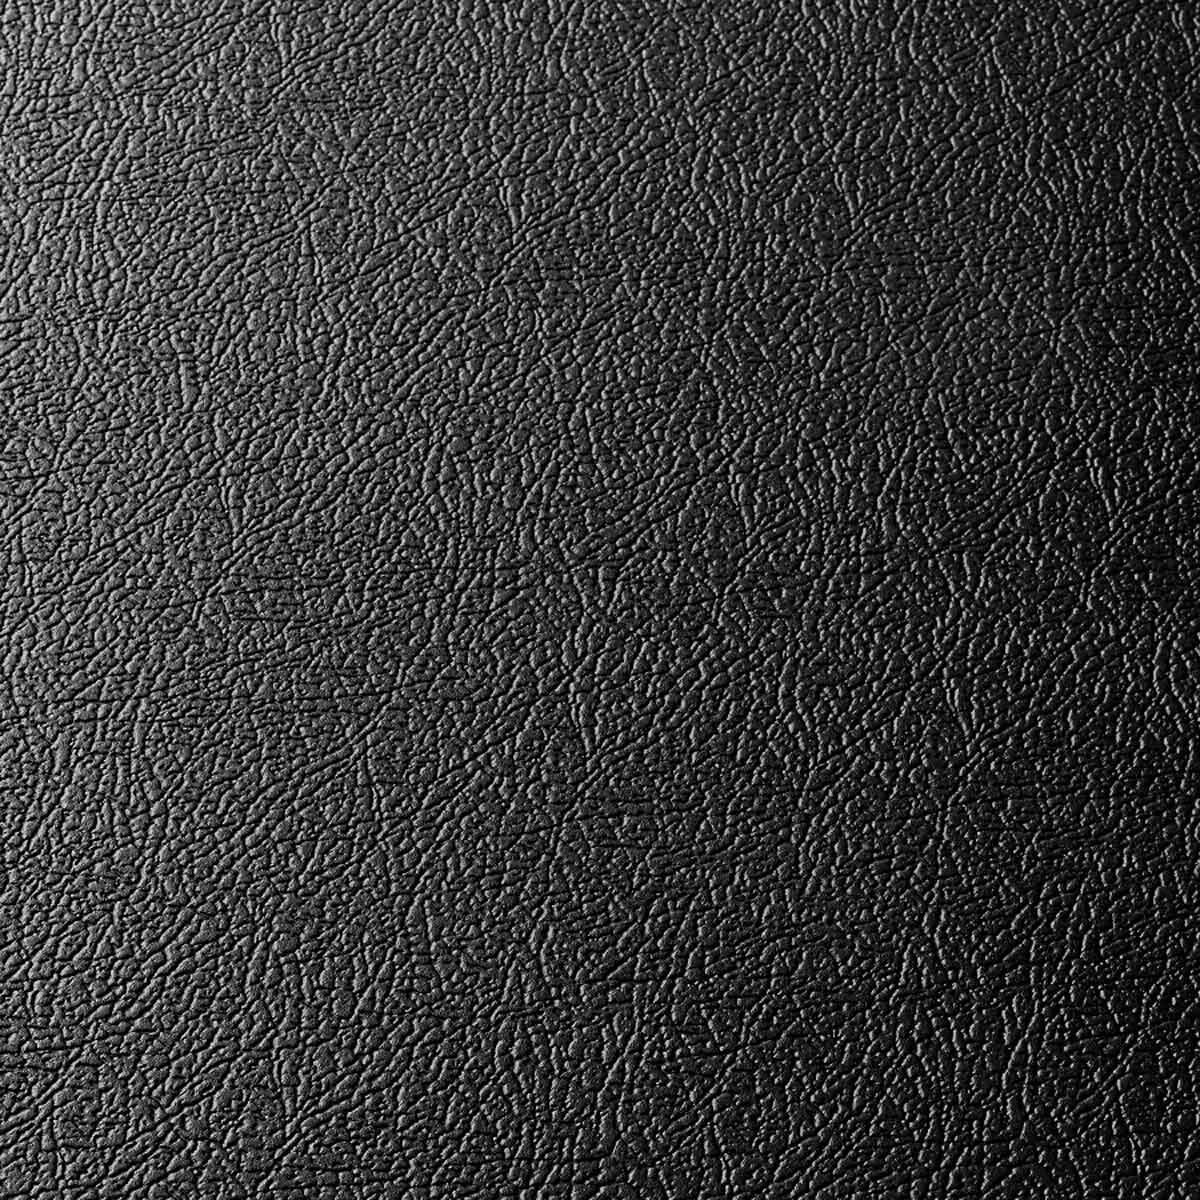 Close up image of black tile surface